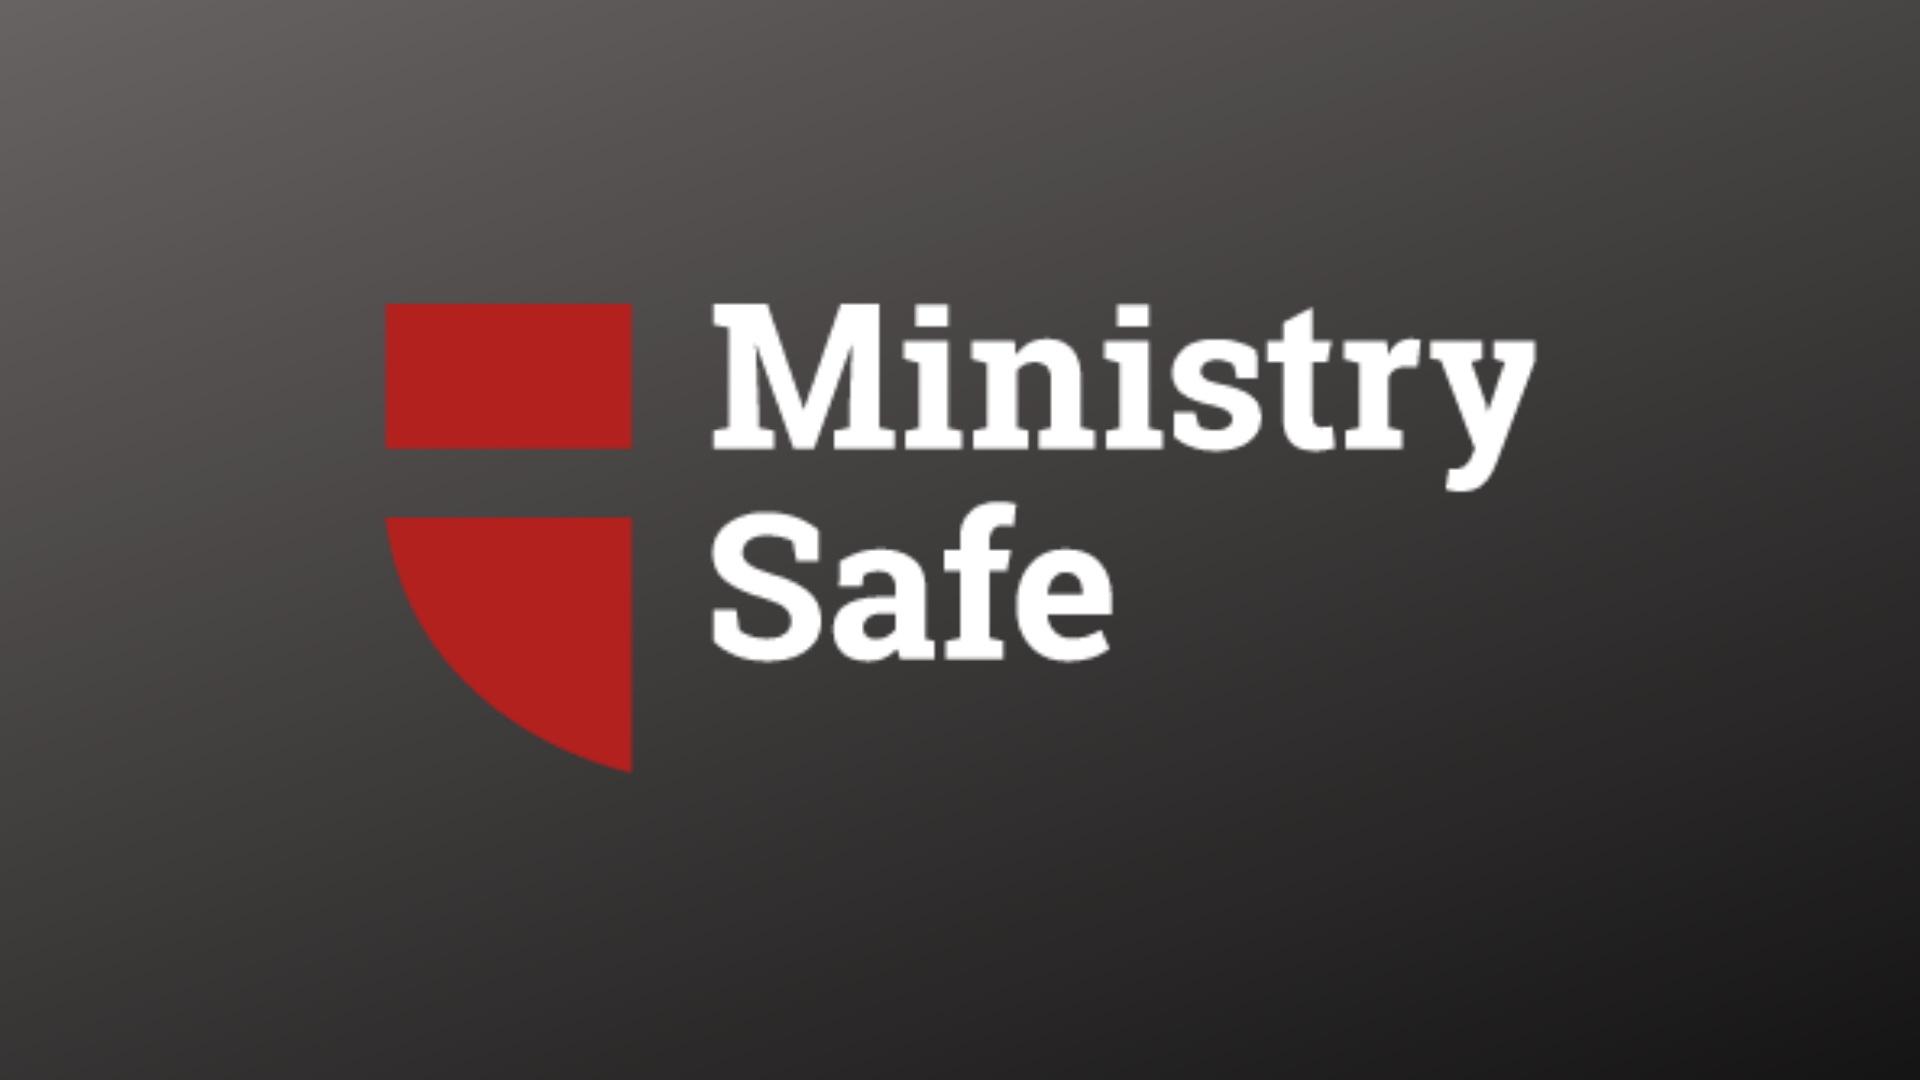 Ministry Safe Training 1920x1080 image